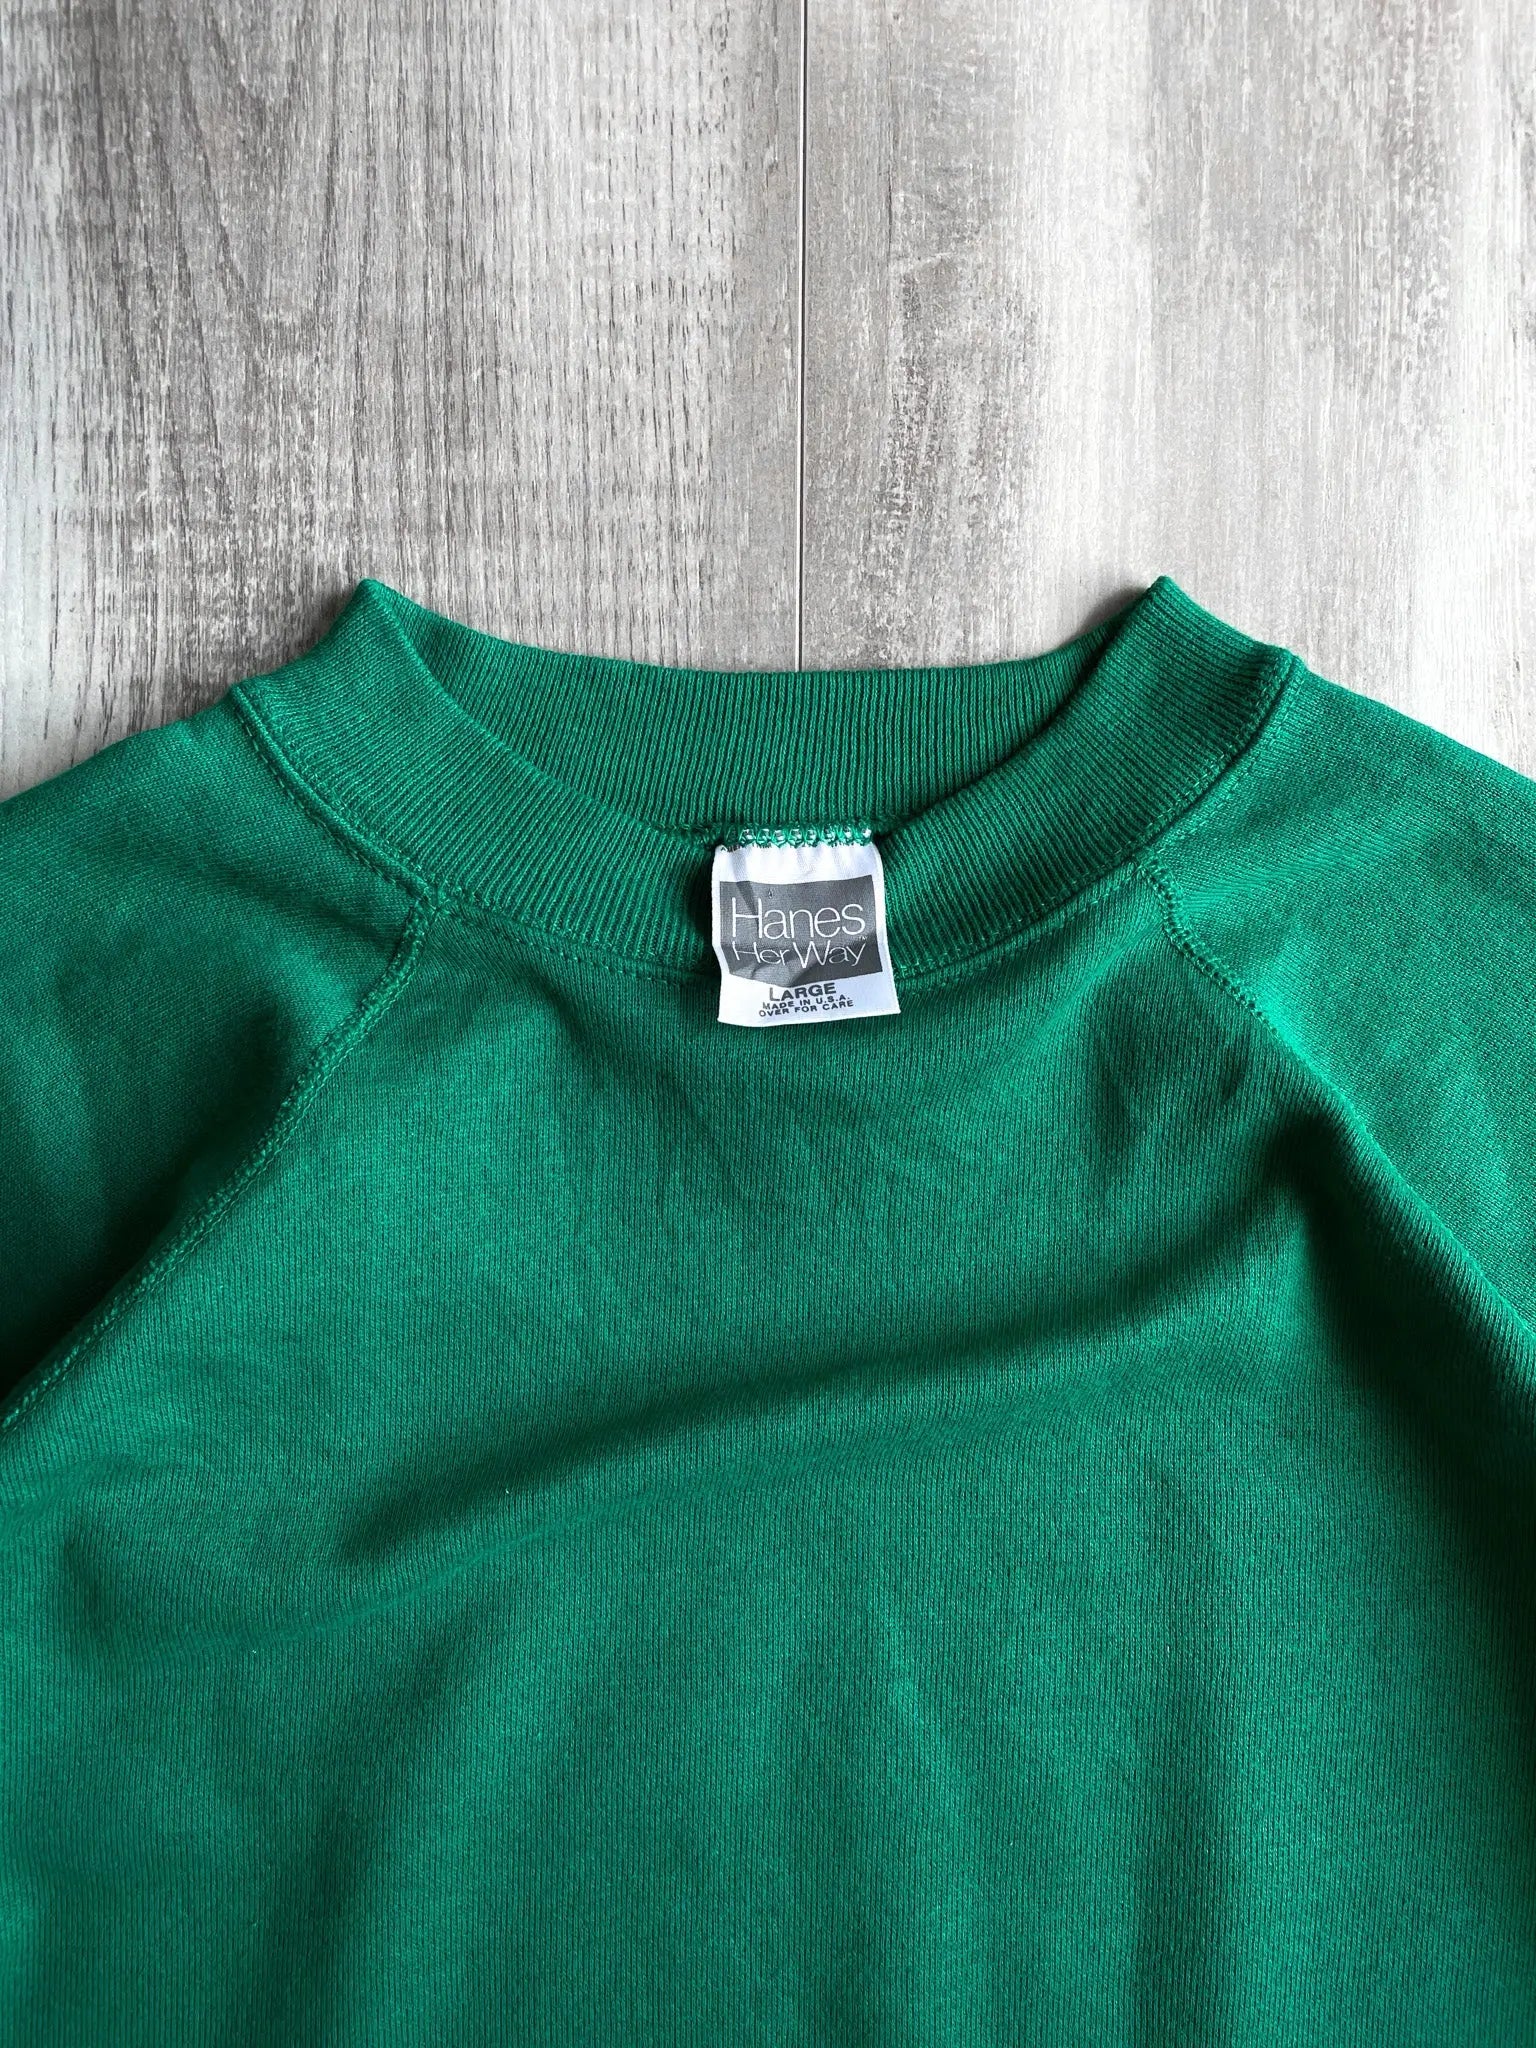 Hanes Her Way Green Sweatshirt - L – sullivansvintage